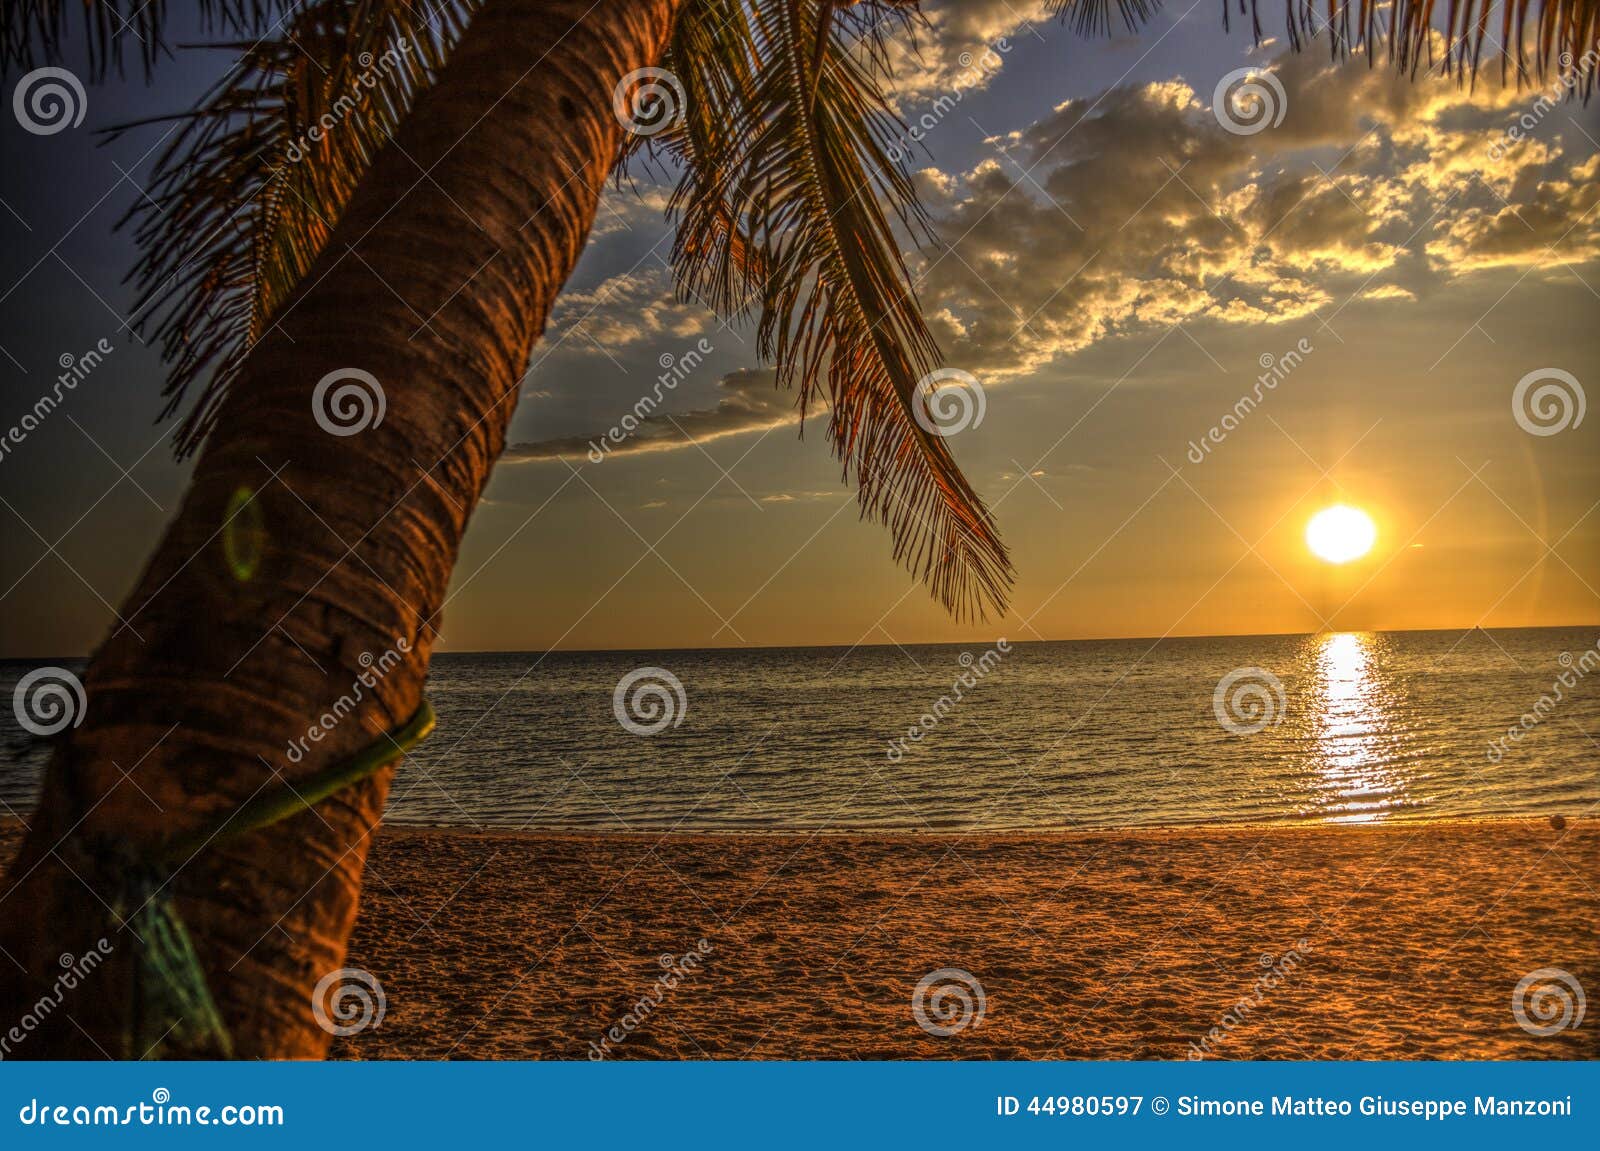 sunset at ifaty beach, madagascar